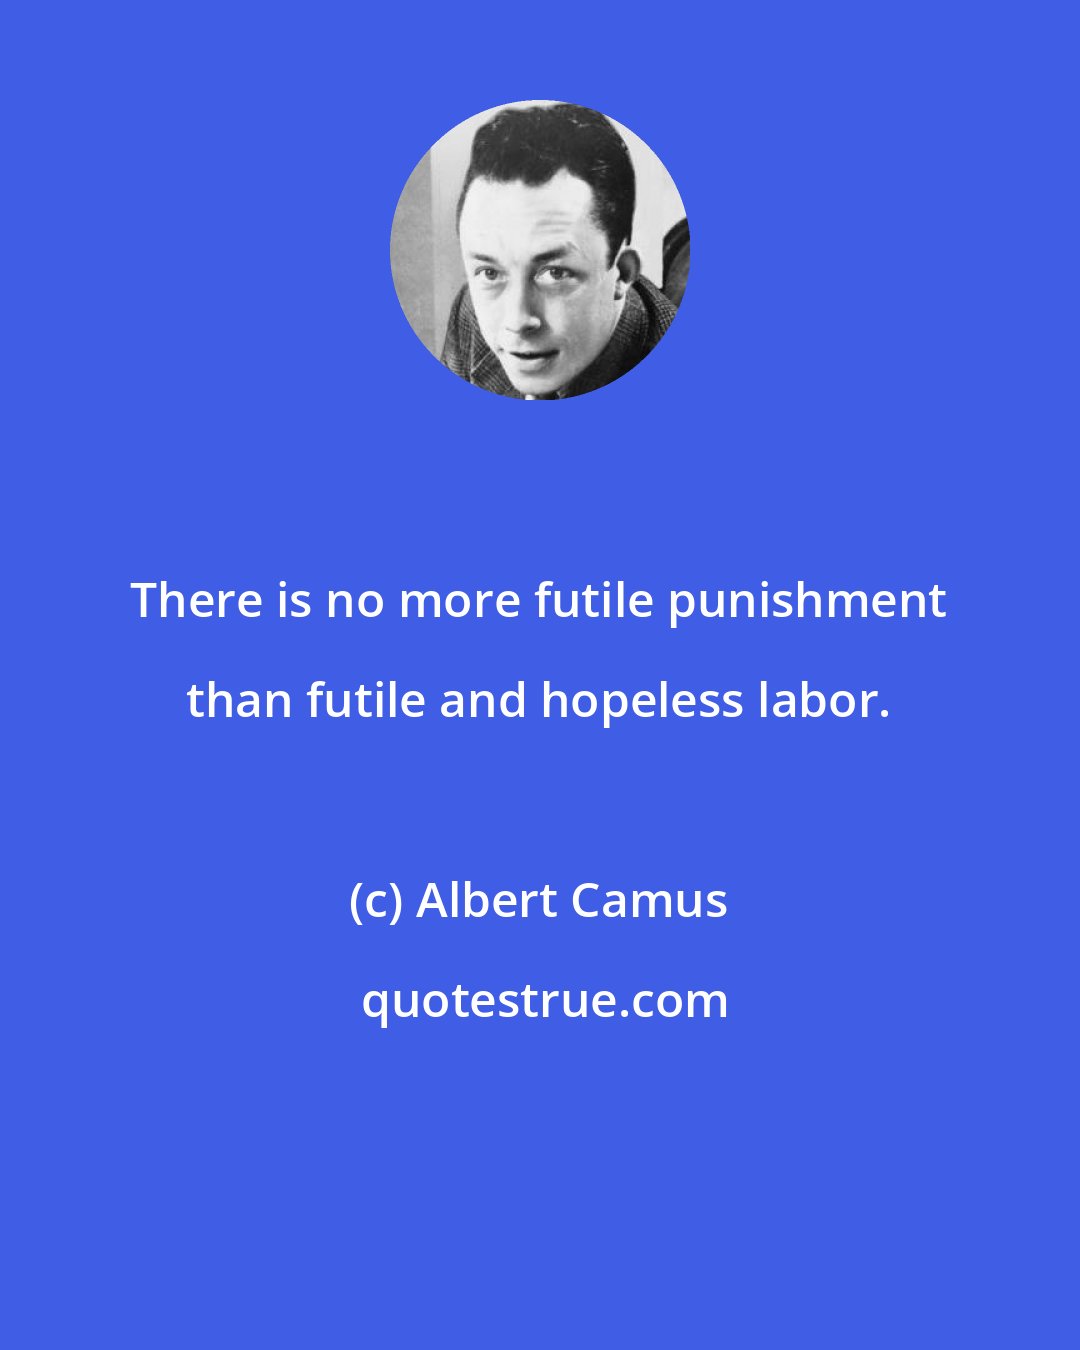 Albert Camus: There is no more futile punishment than futile and hopeless labor.